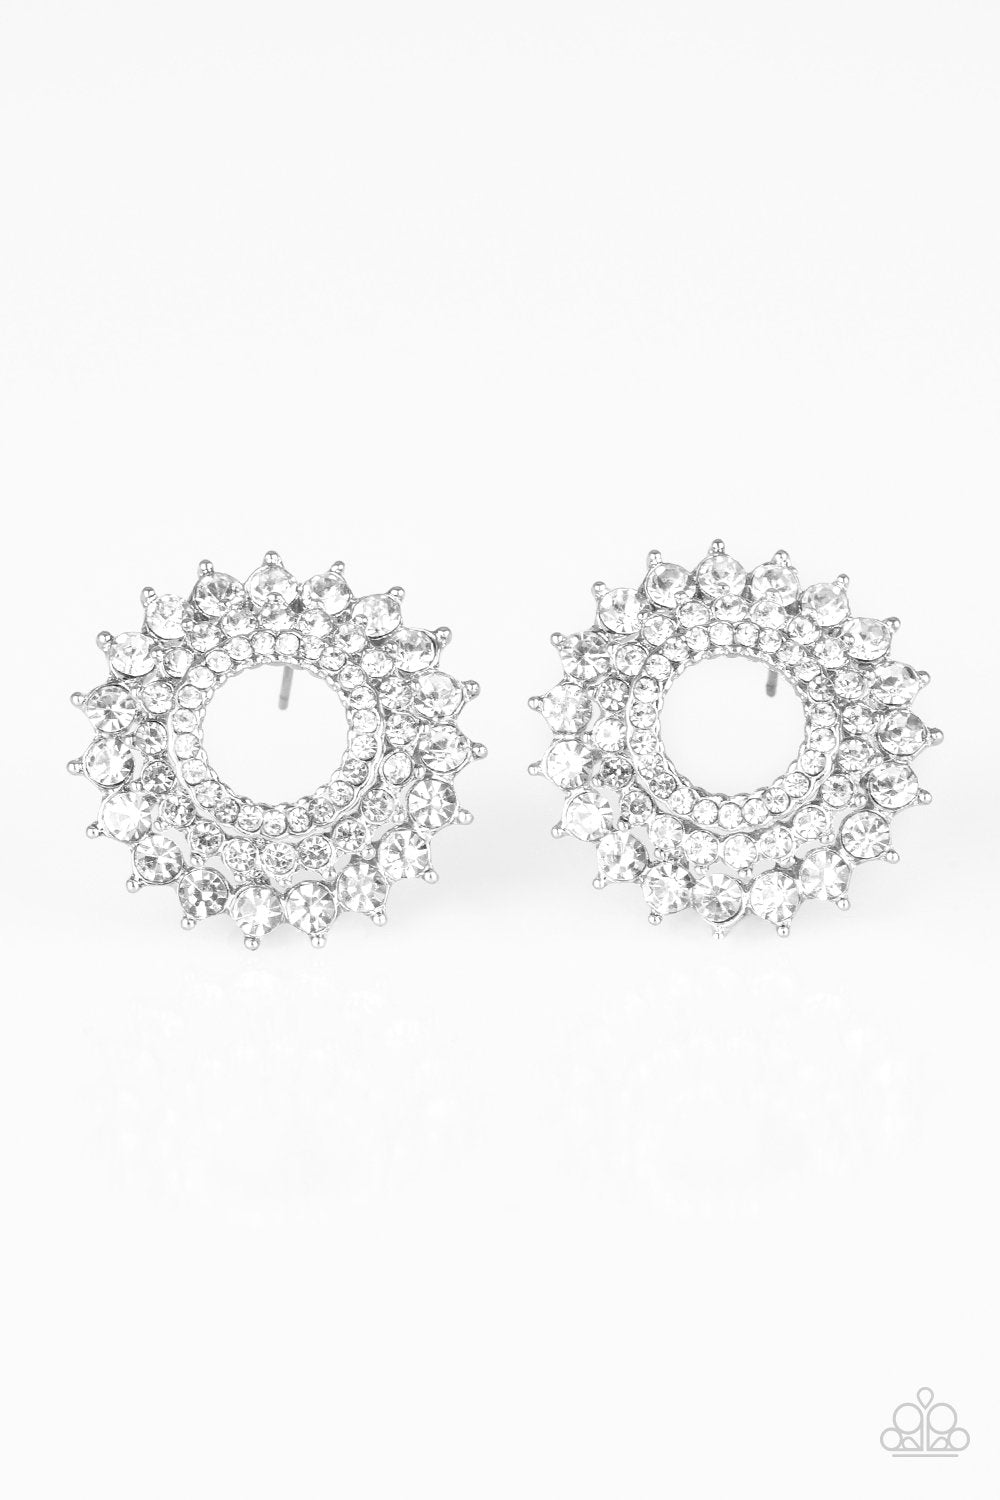 Buckingham Beauty White Rhinestone Post Earrings - Paparazzi Accessories-CarasShop.com - $5 Jewelry by Cara Jewels